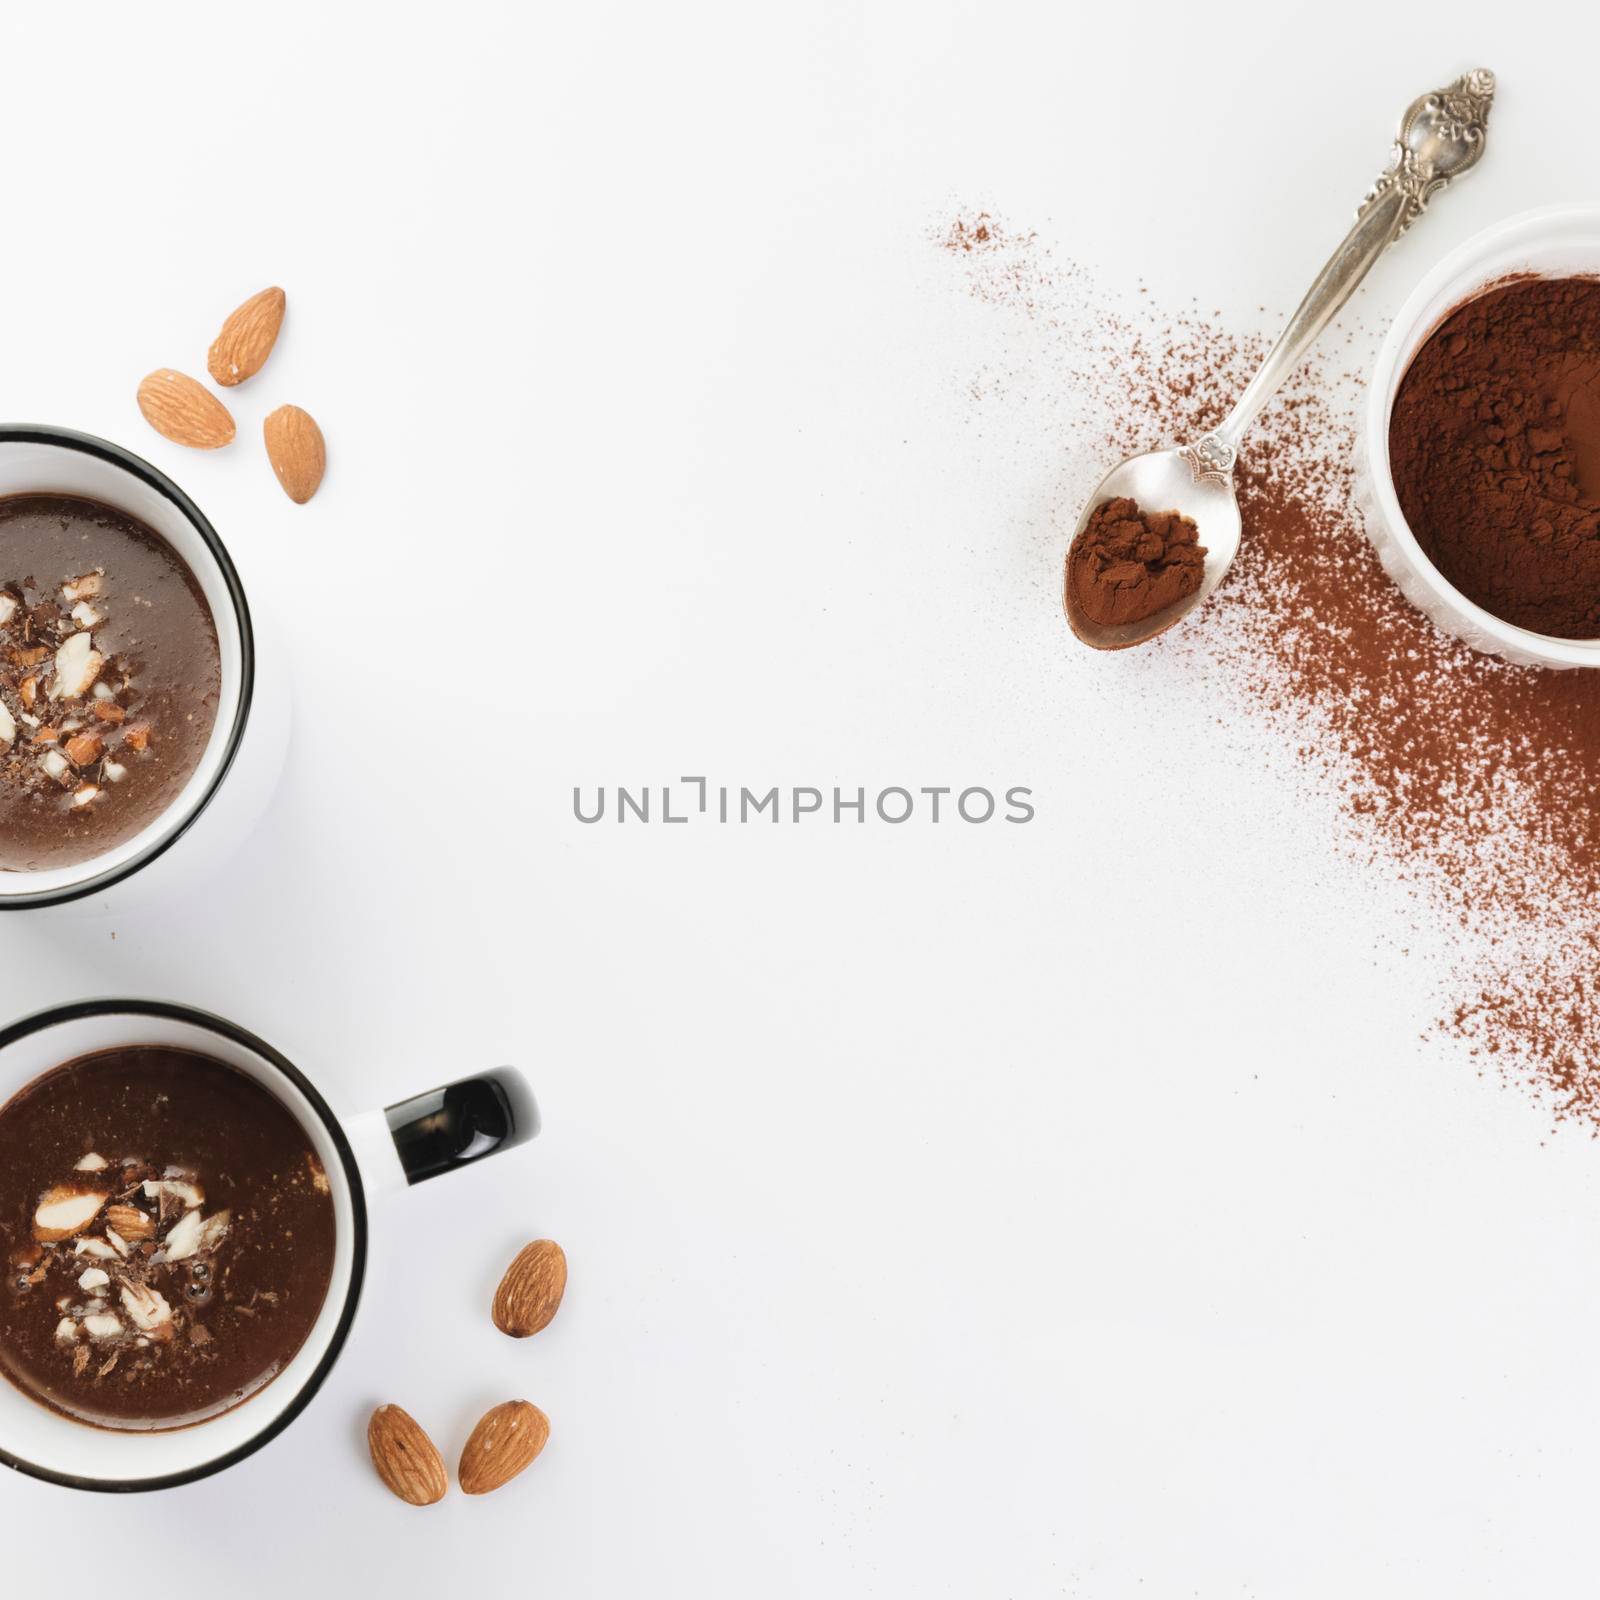 hot chocolate nuts cocoa powder. High quality photo by Zahard